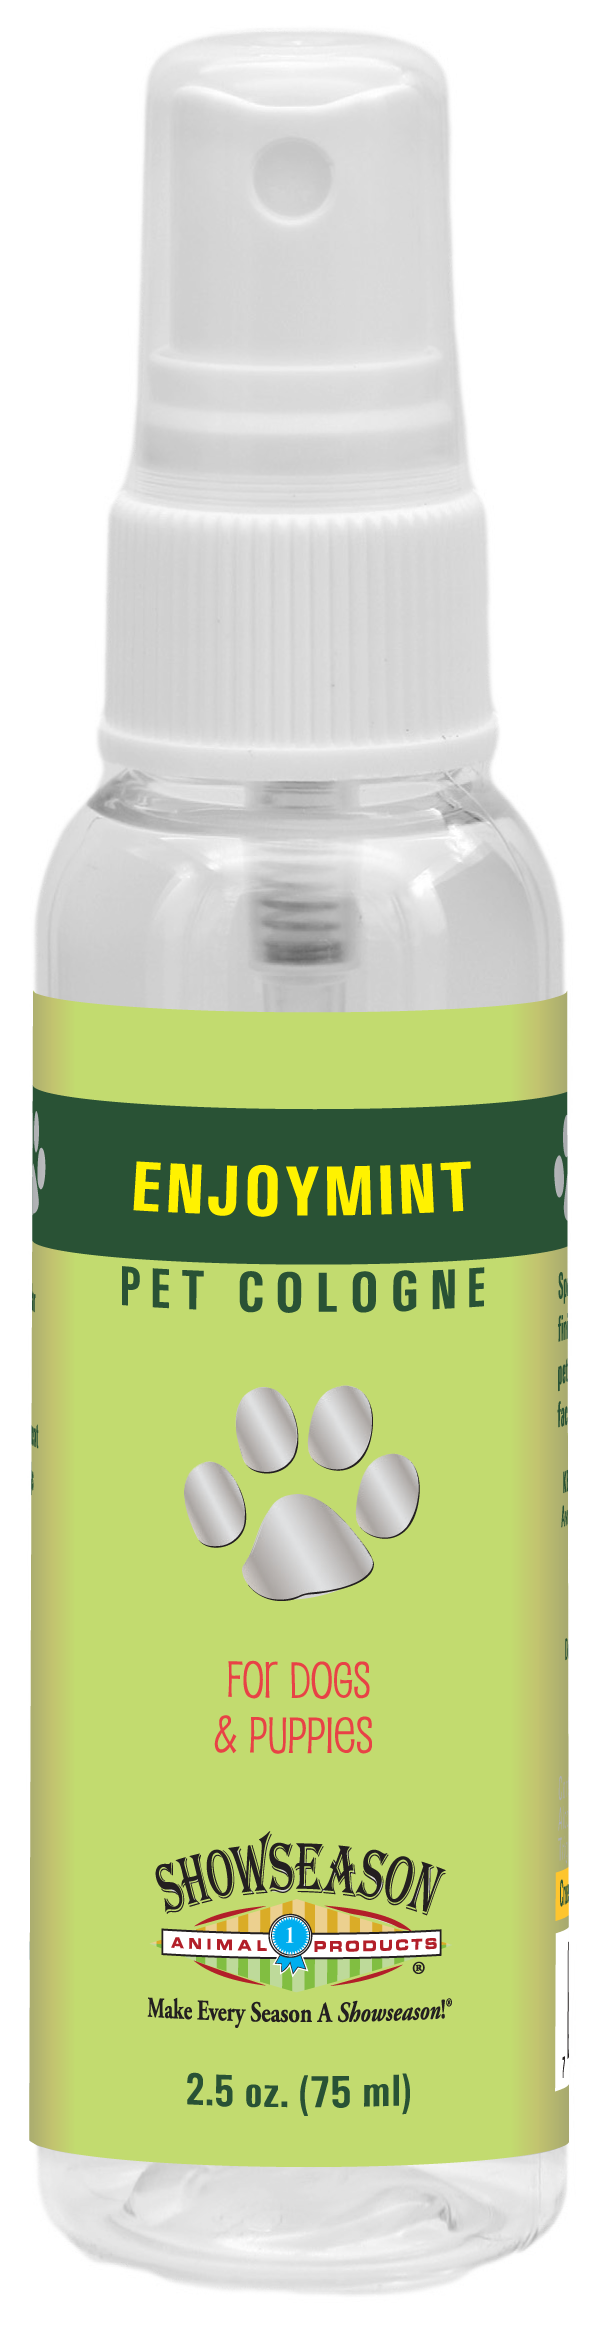 Enjoymint Pet Cologne | Showseason®